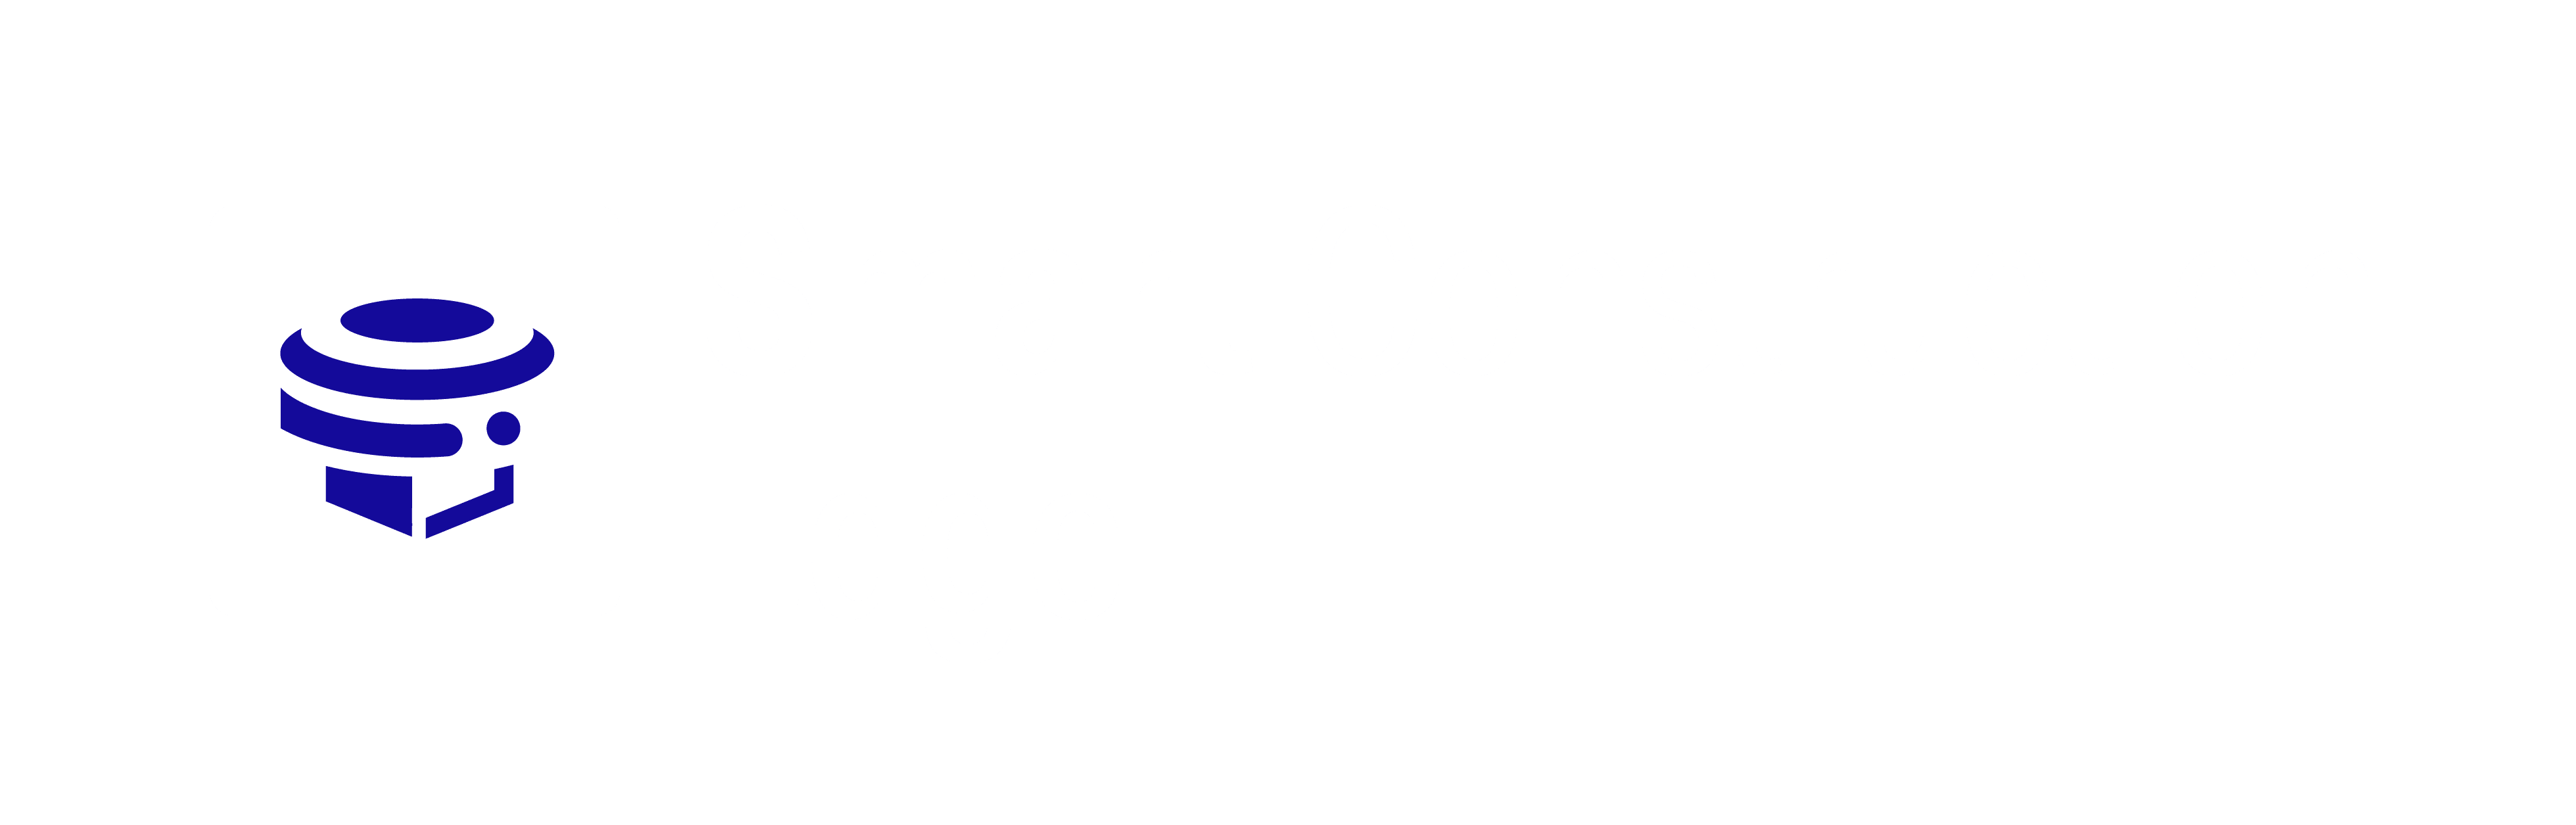 Smart Construction Edge